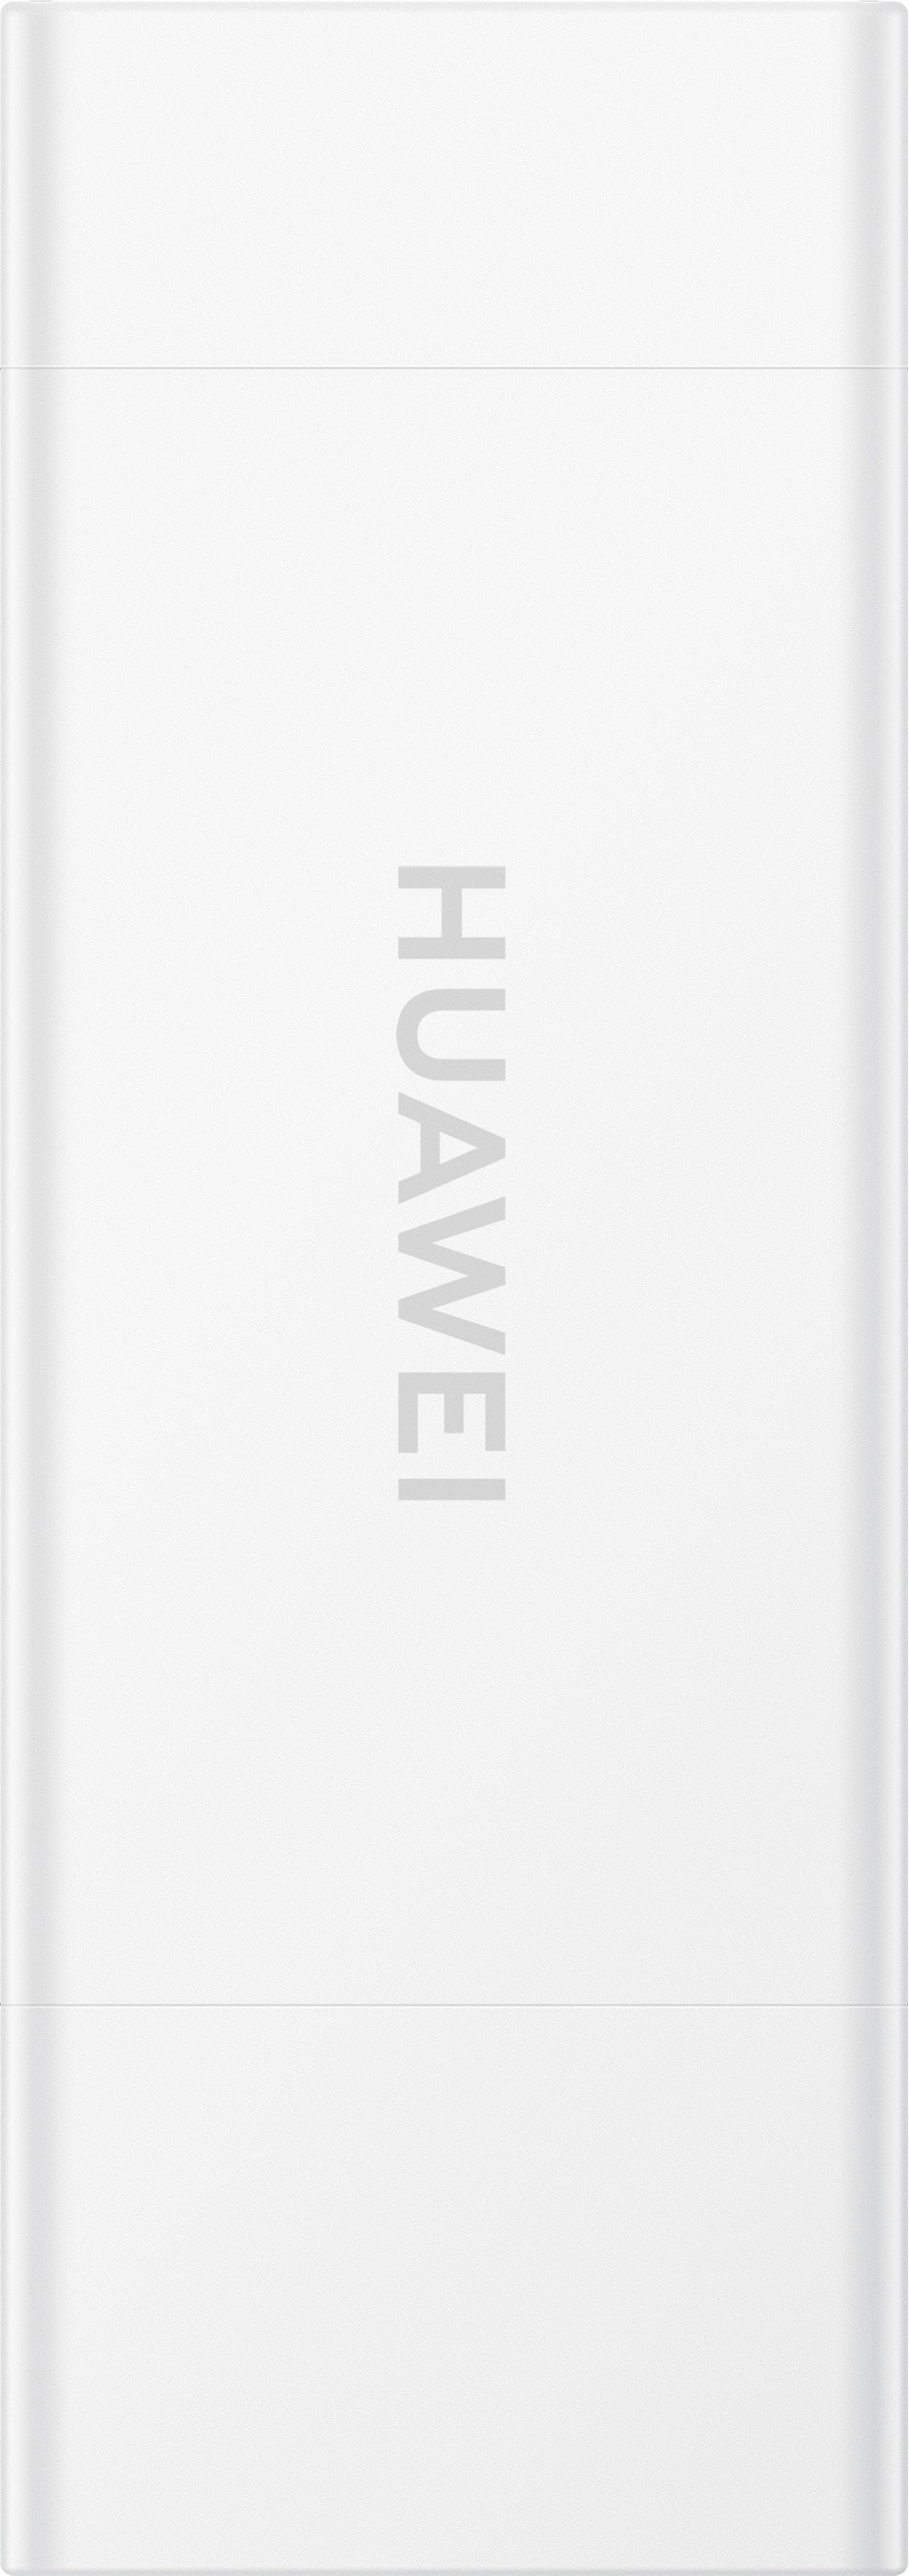 HUAWEI NM Karten-Lesegerät Weiß